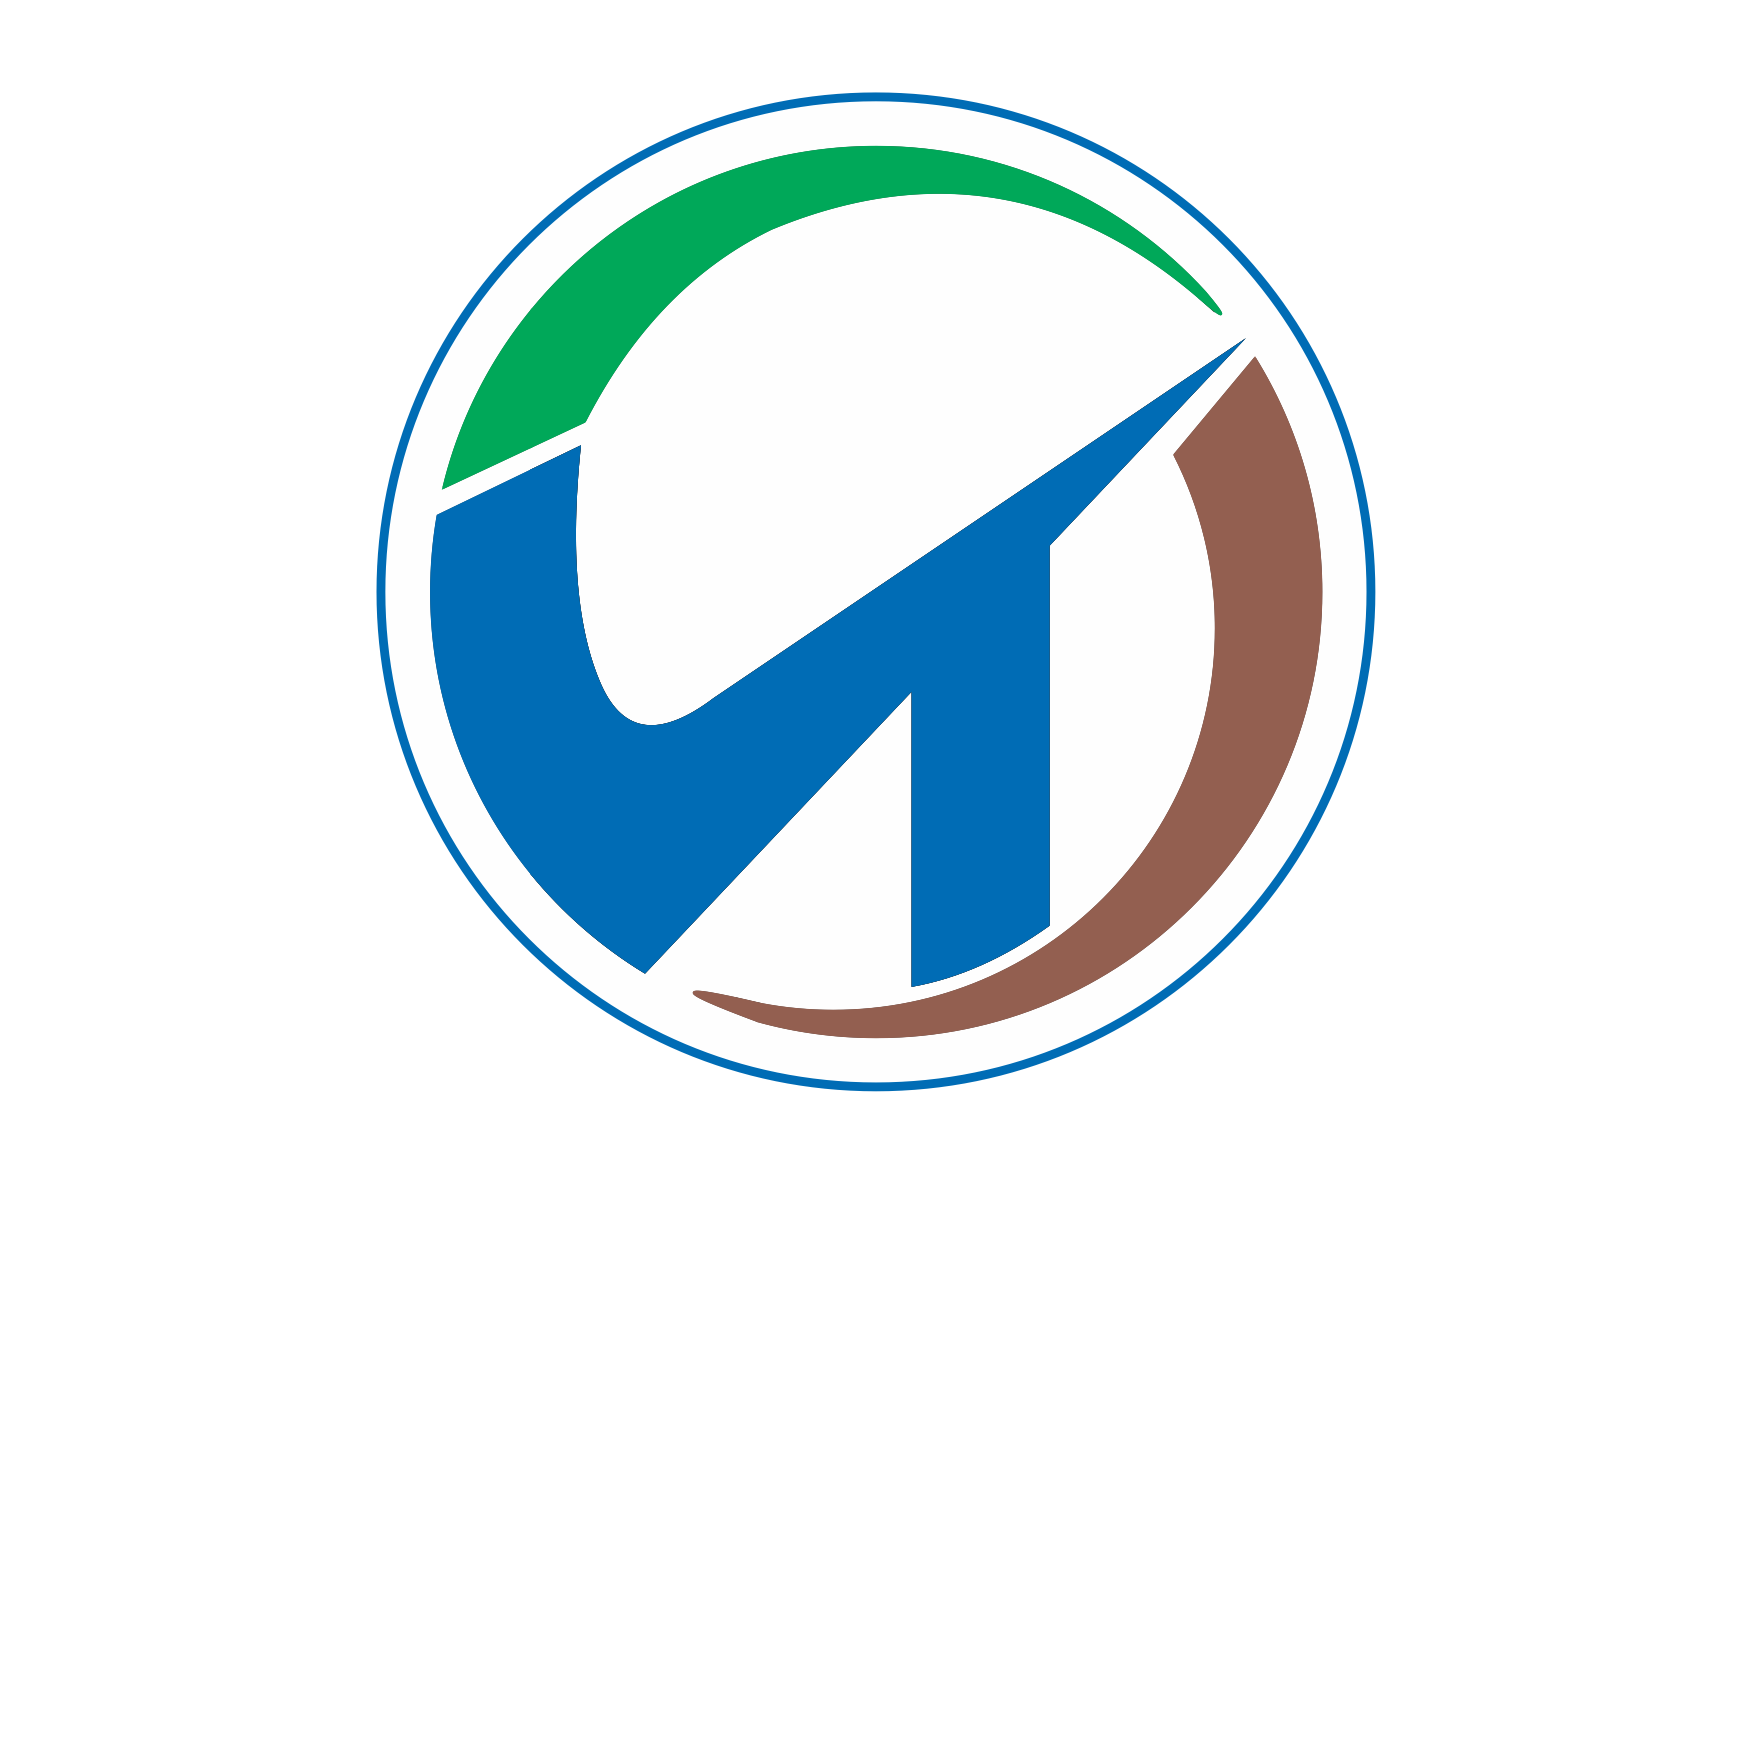 Vietthanhmedia.com